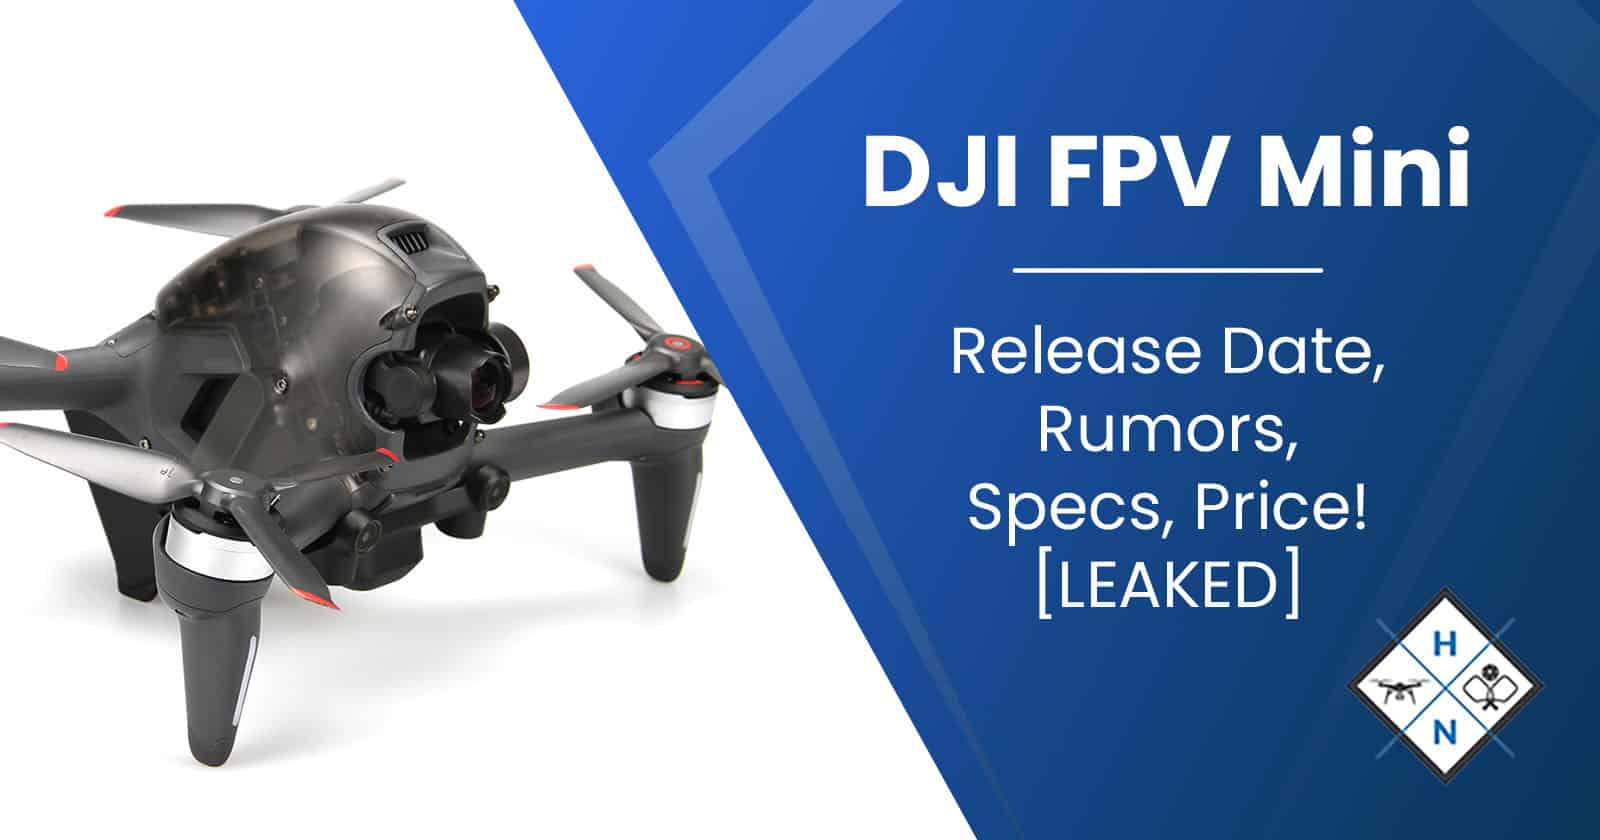 DJI FPV Mini – Release Date, Rumors, Specs, Price! [LEAKED]